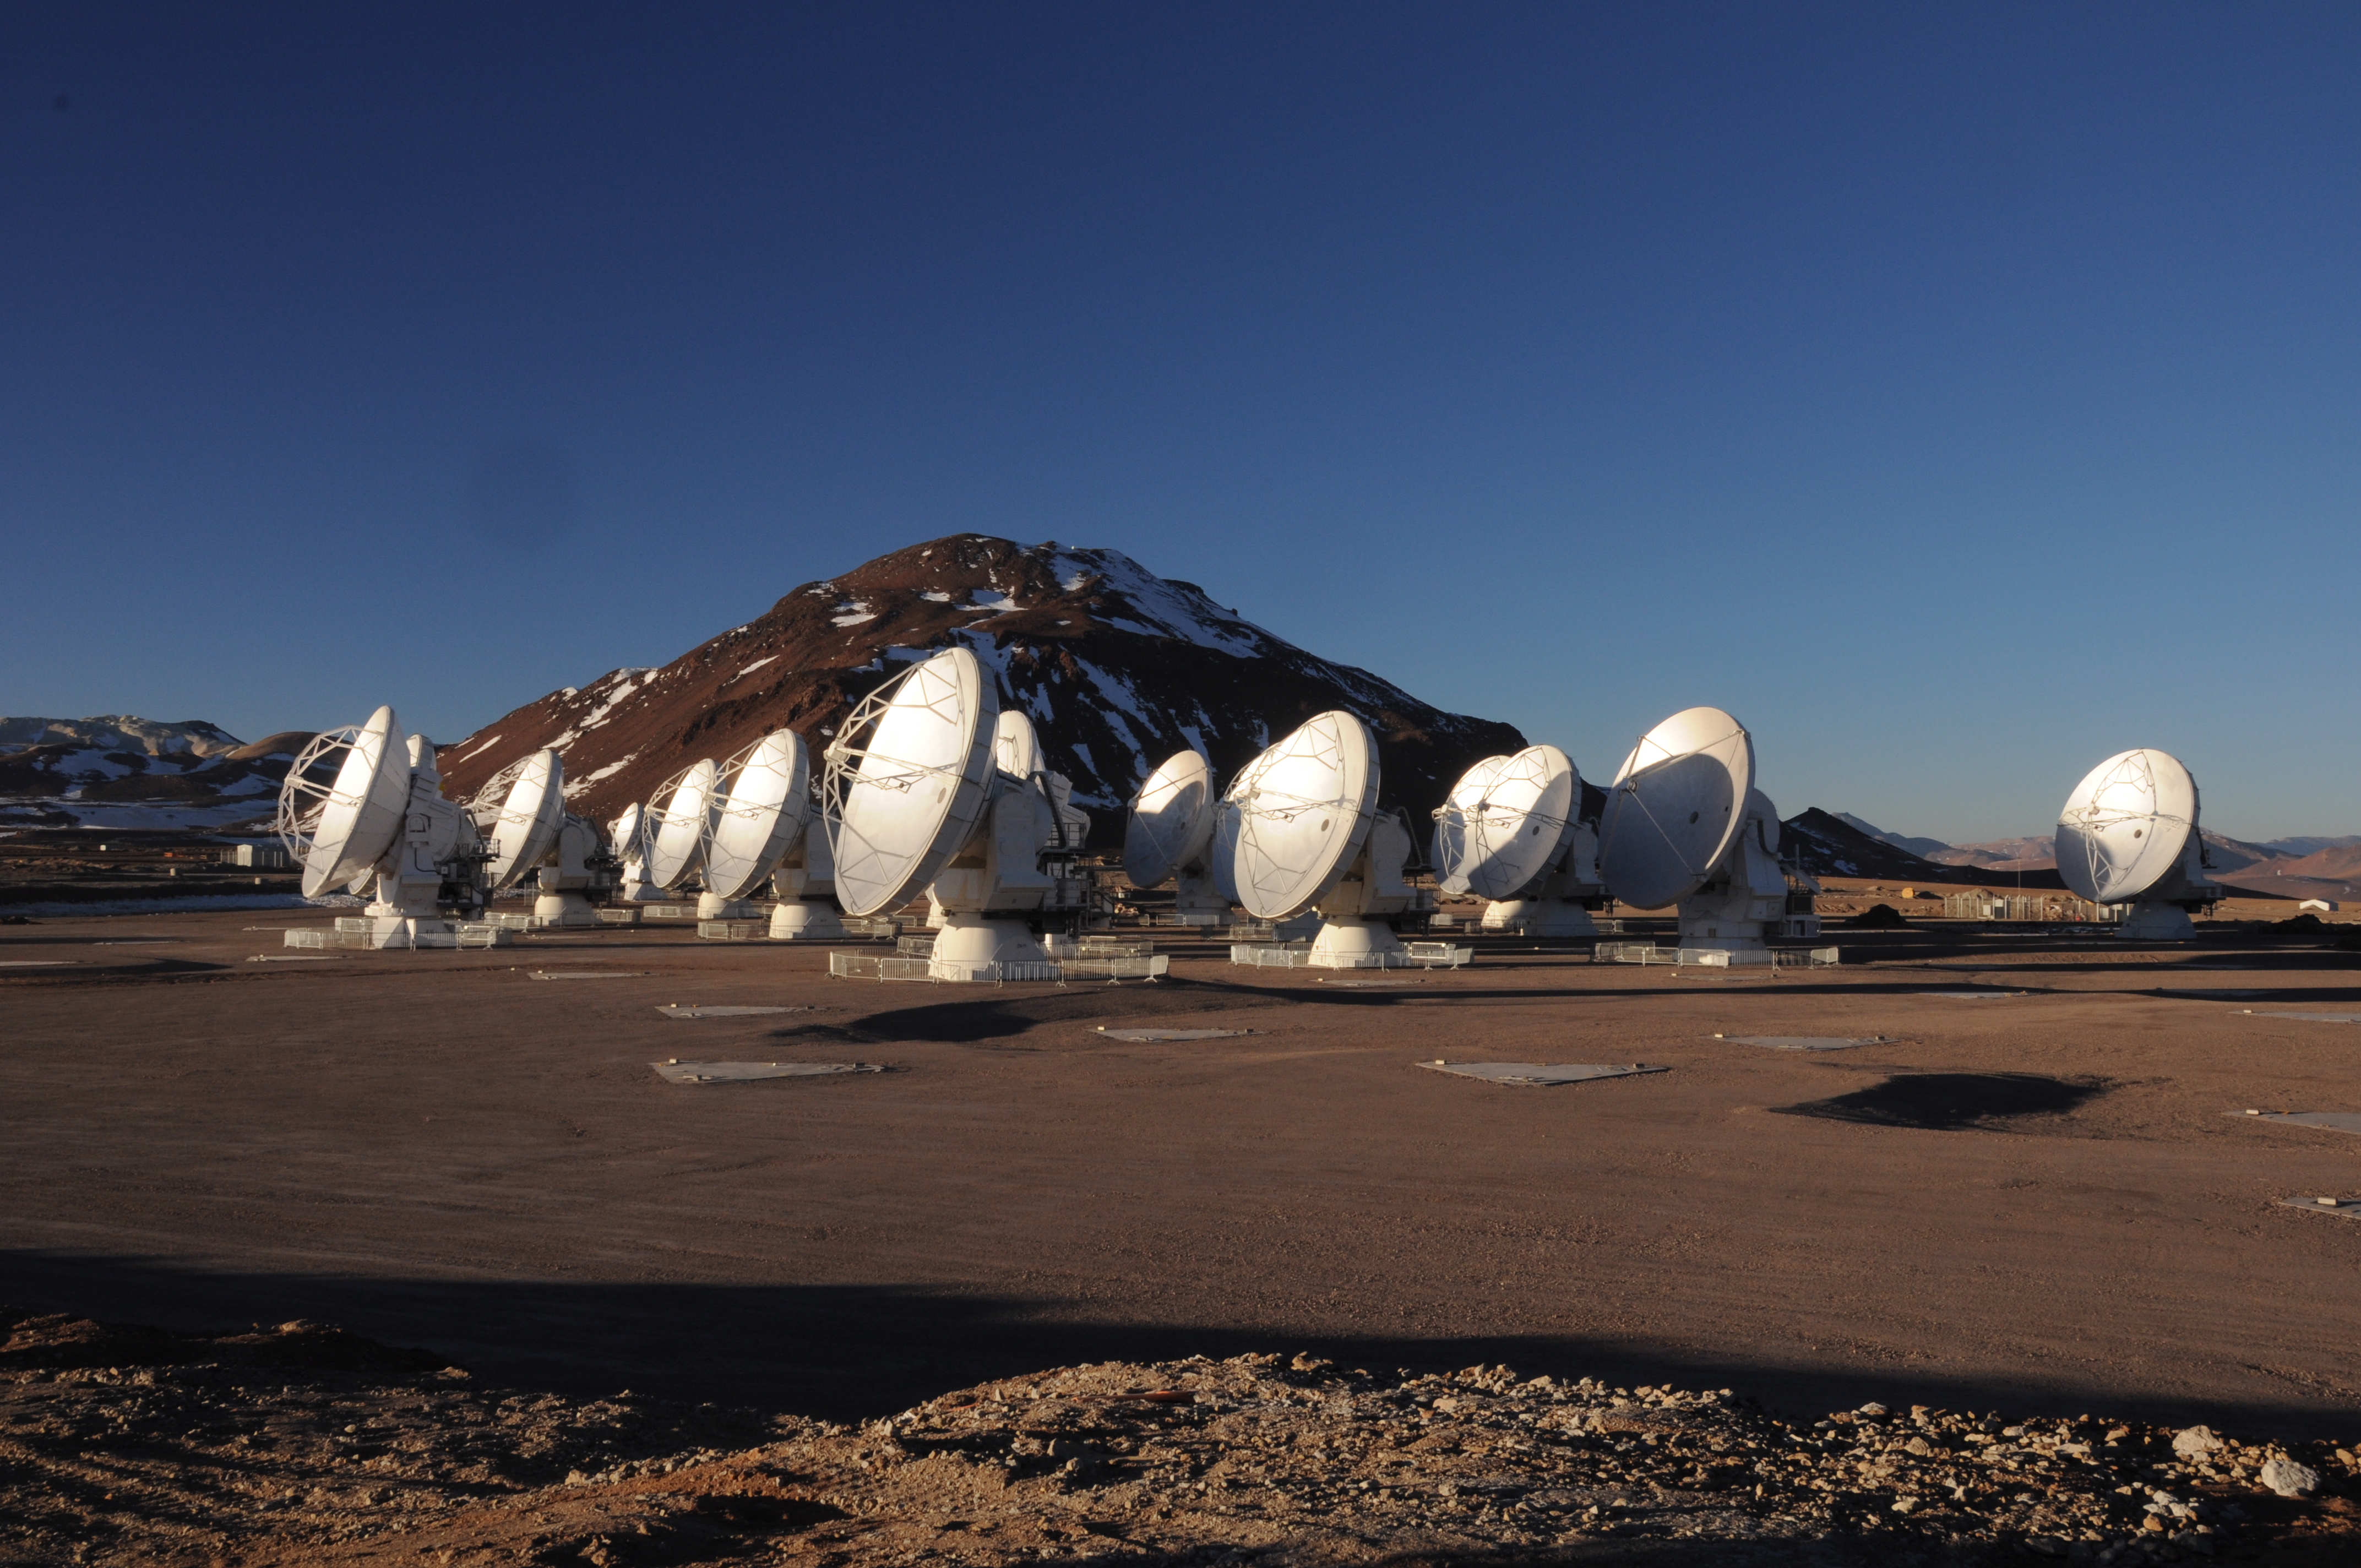 Understanding Radio Telescopes and the Advantages of Radio Astronomy